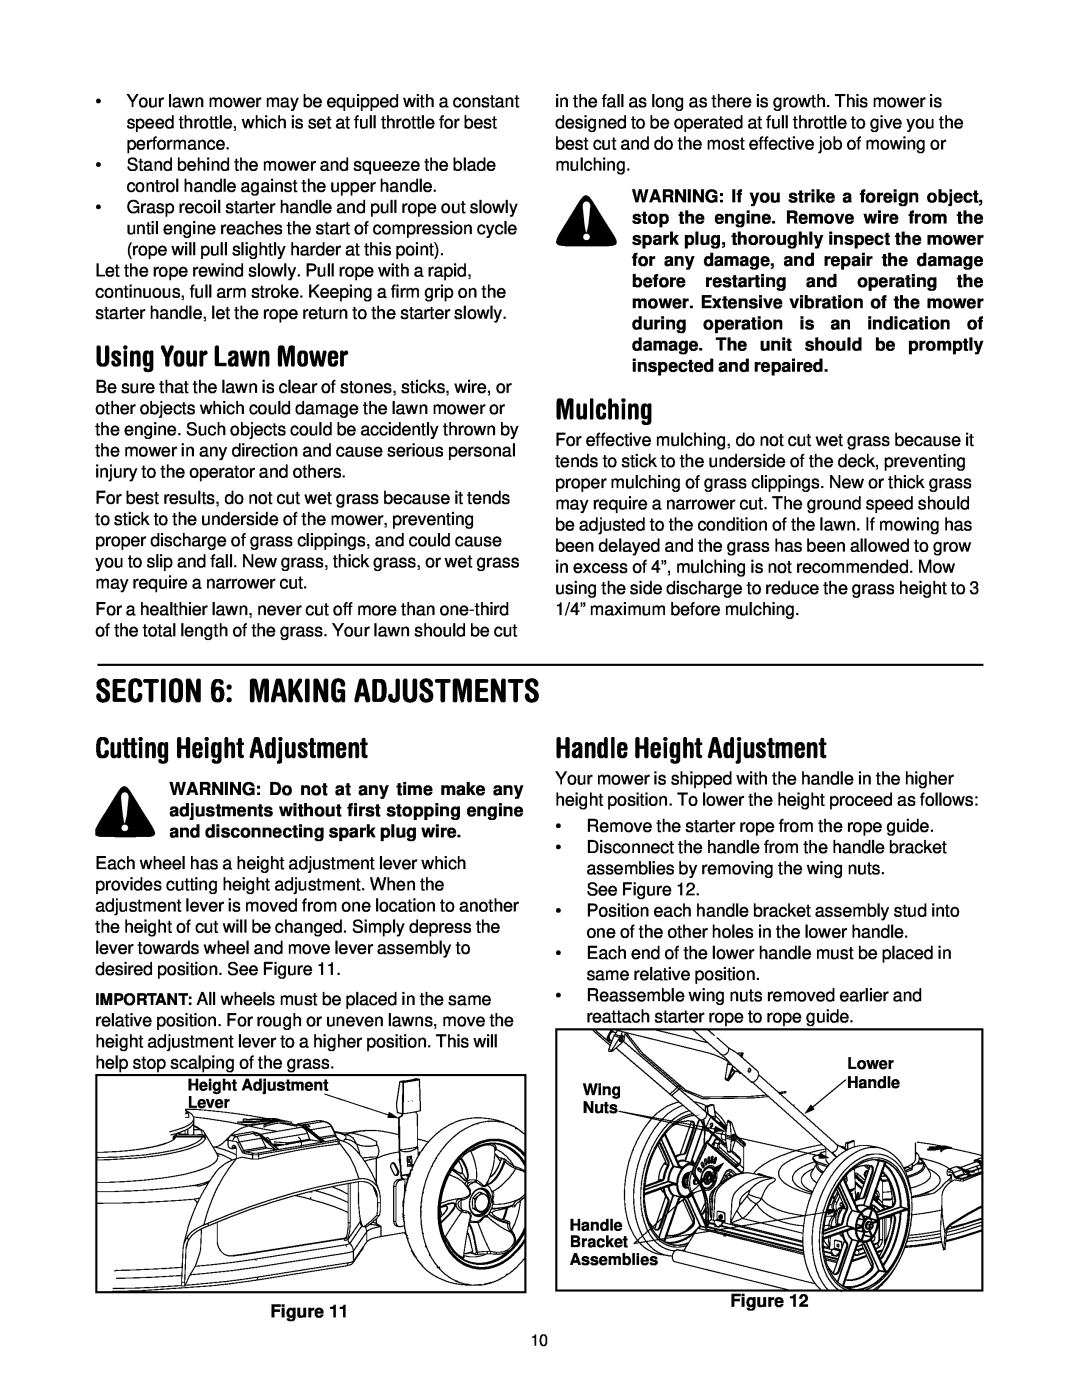 Yard-Man 503 Making Adjustments, Using Your Lawn Mower, Mulching, Cutting Height Adjustment, Handle Height Adjustment 